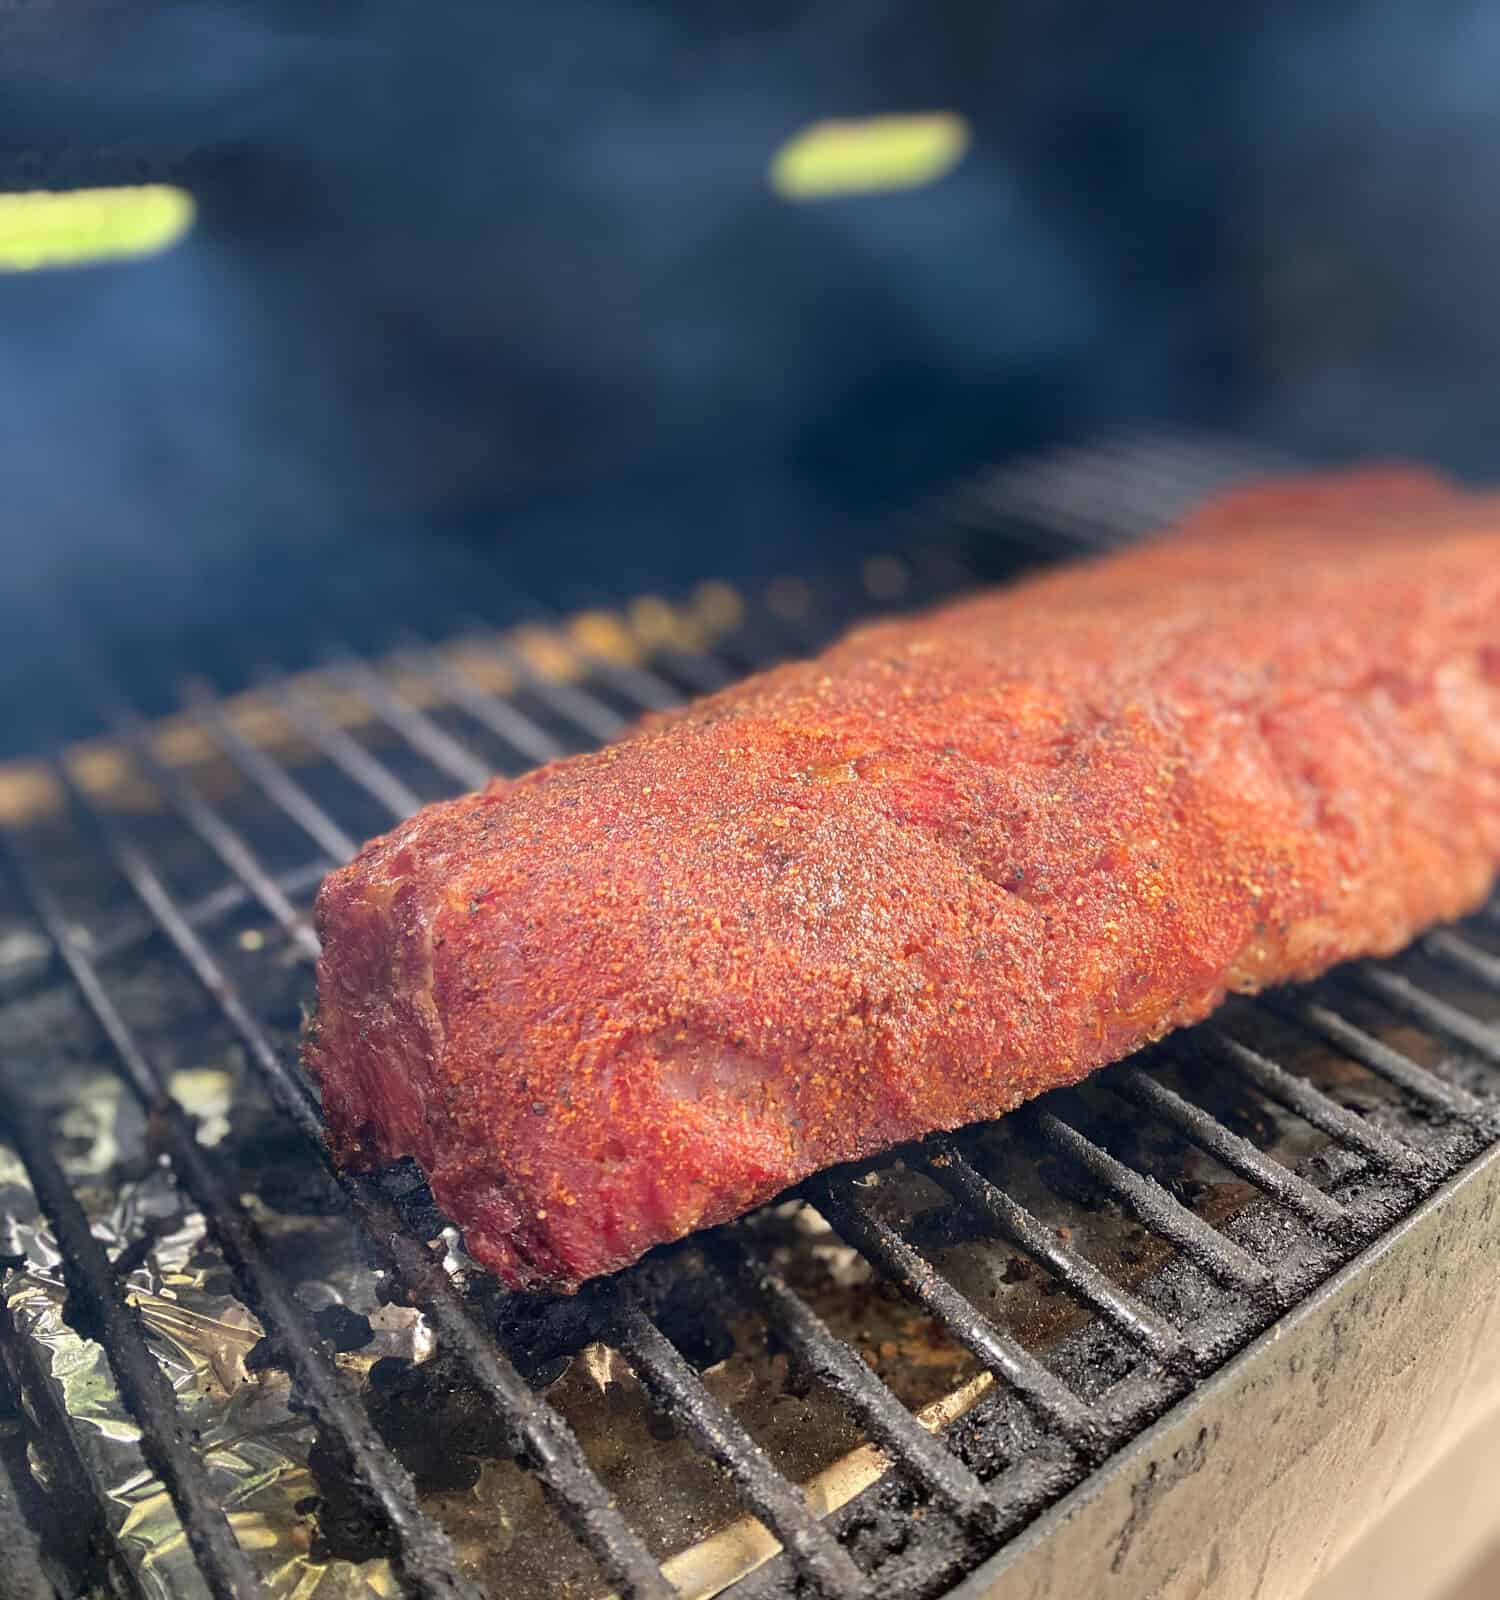 Smoked BBQ pork ribs on a Traeger smoker